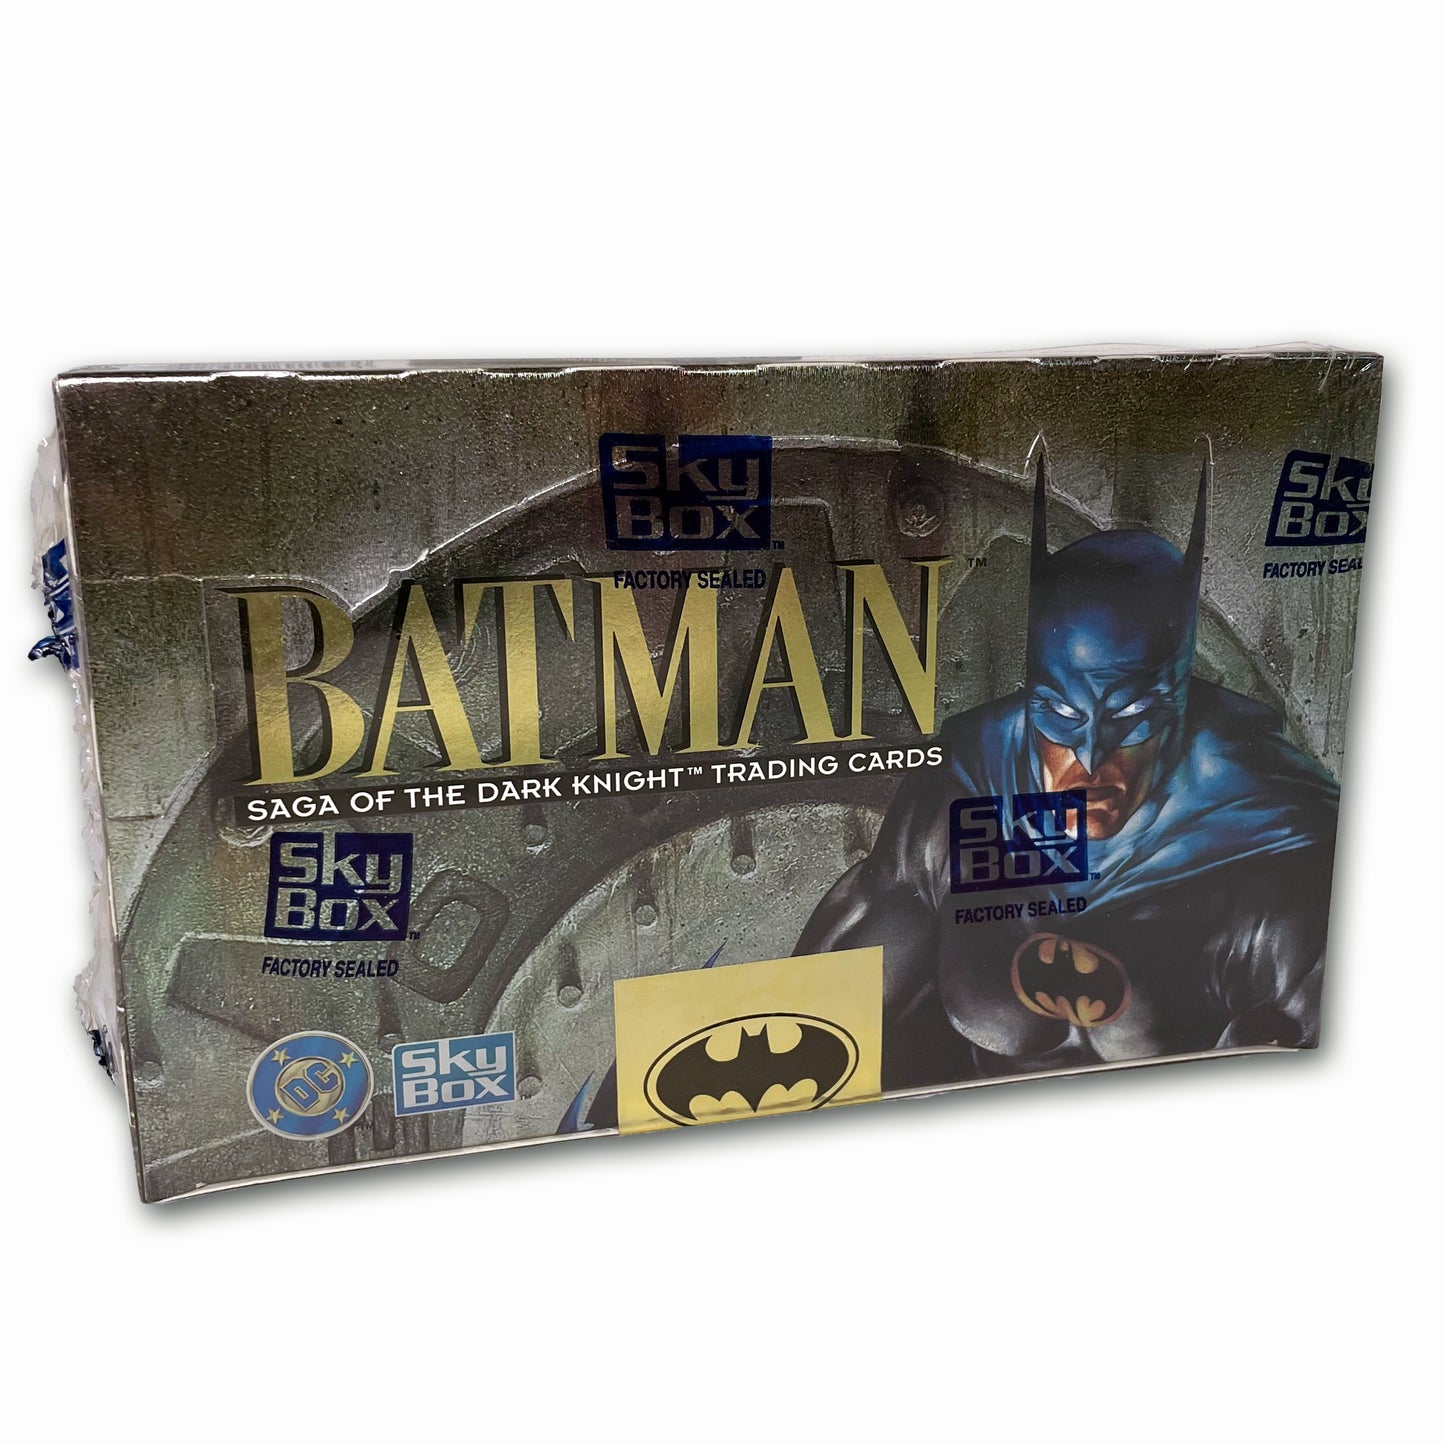 Batman - Saga of the Dark Knight Trading Cards Sealed Box